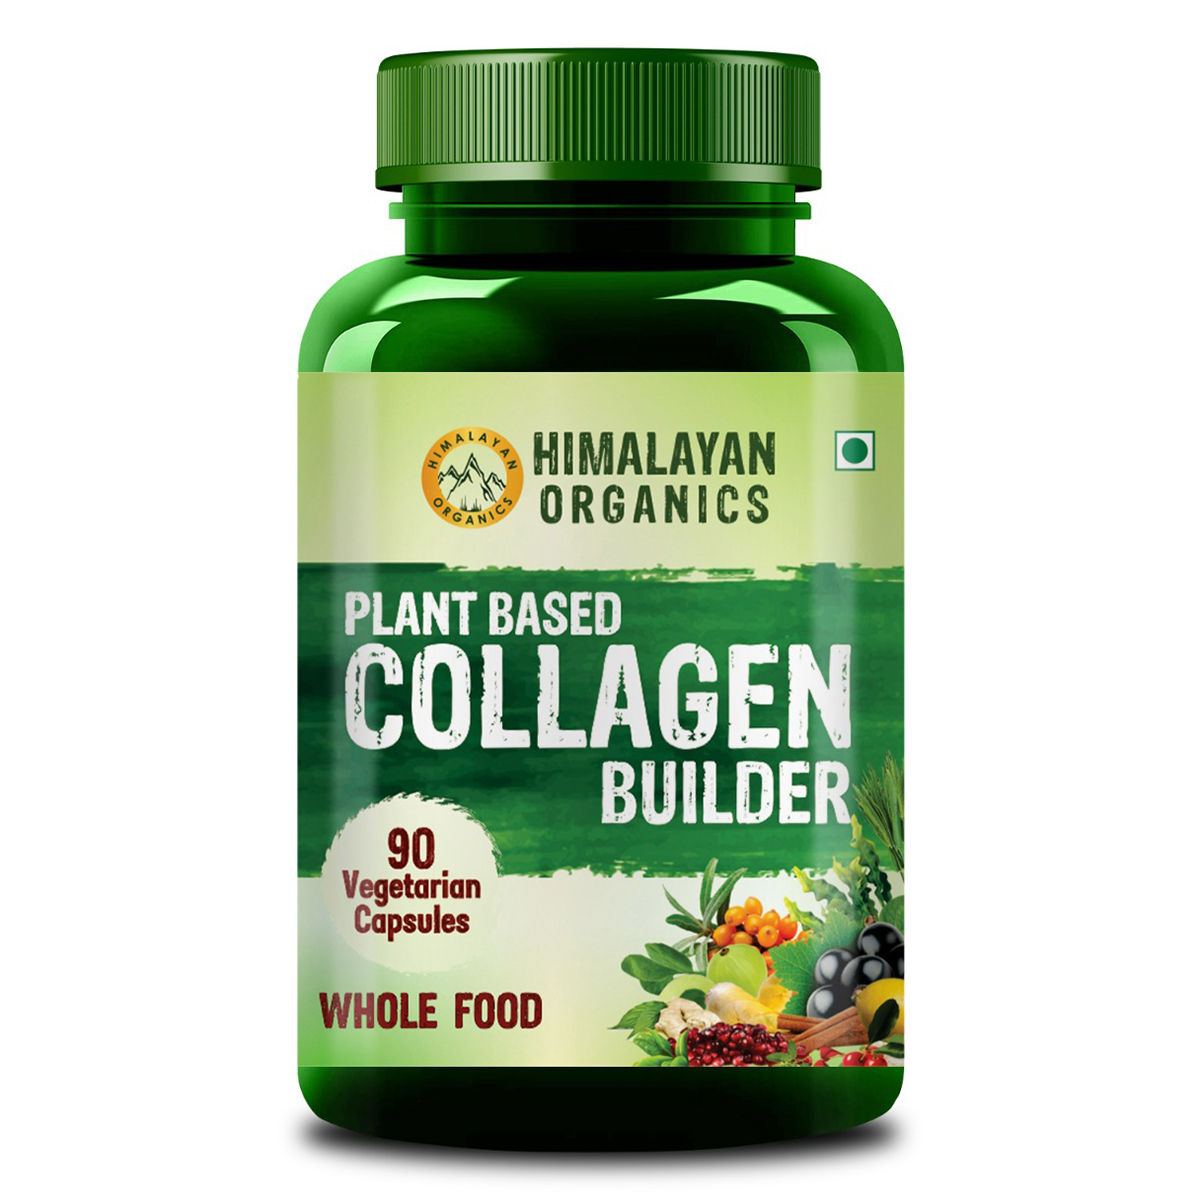 Buy Himalayan Organics Plant Based Collagen Builder, 90 Capsules Online